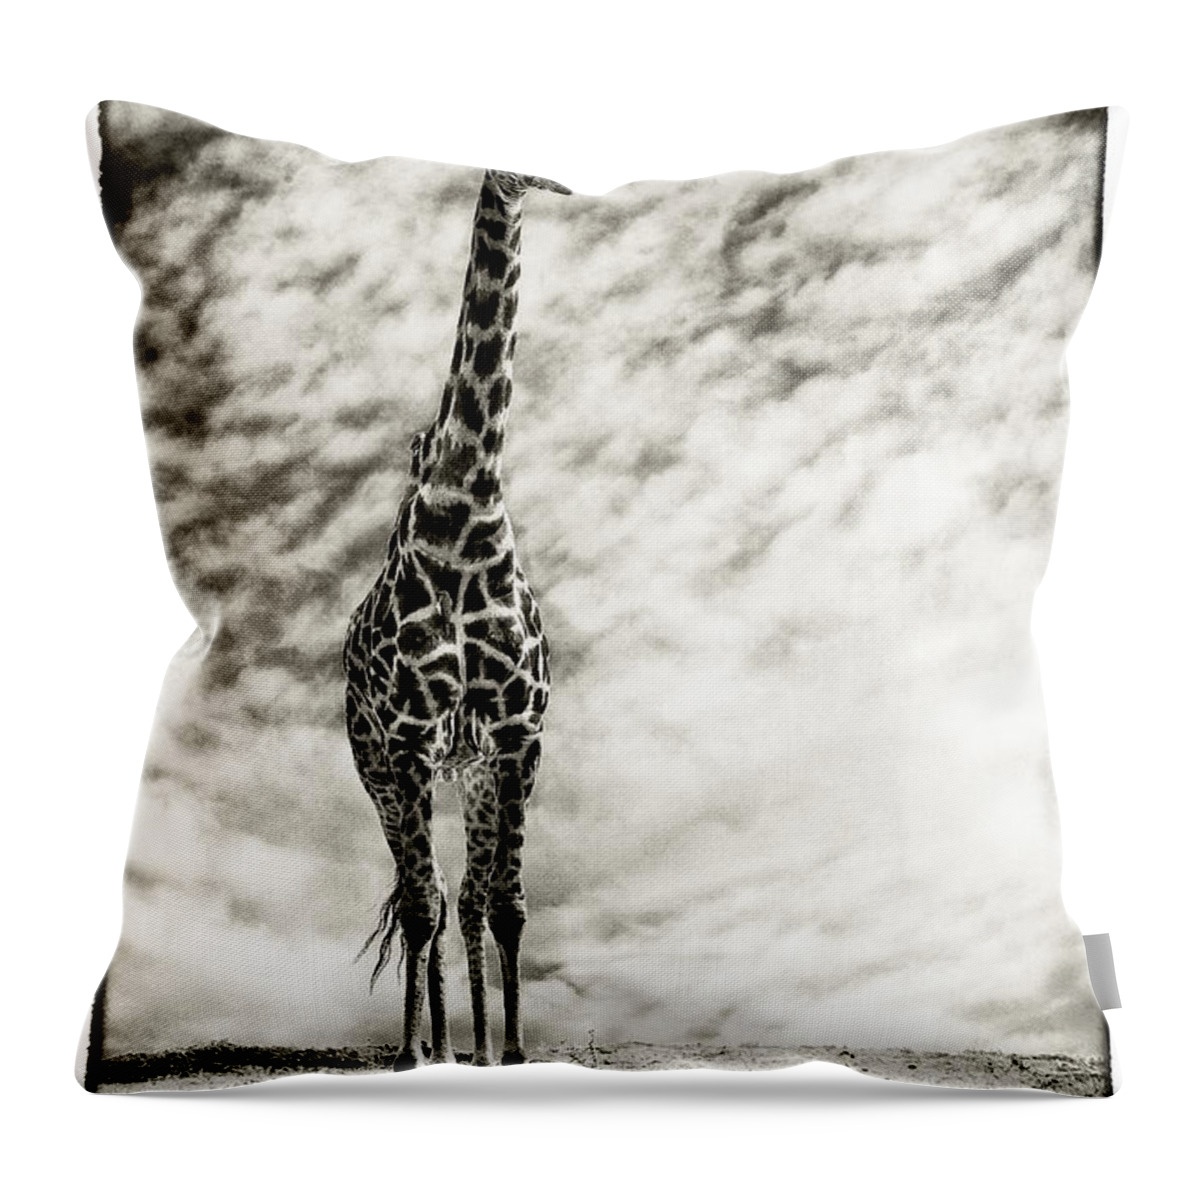 Africa Throw Pillow featuring the photograph Male Giraffe by Perla Copernik